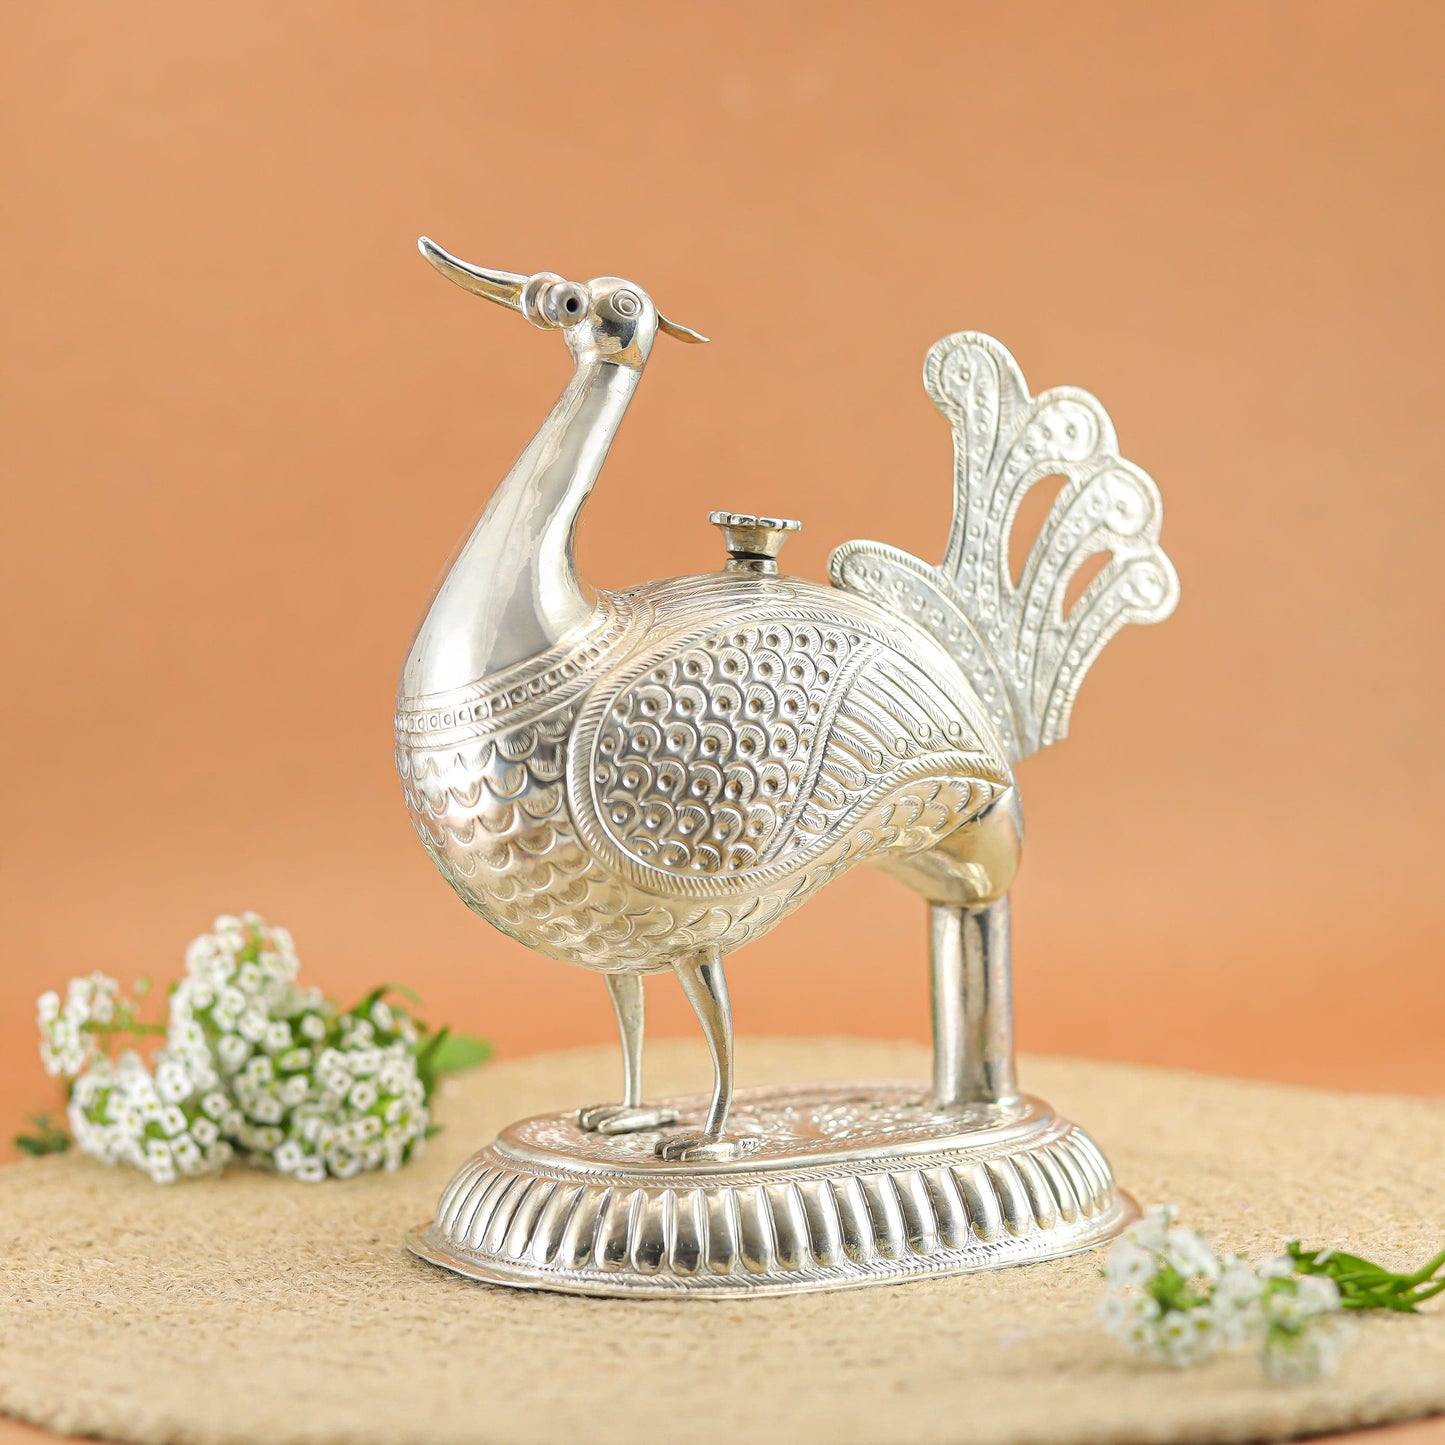 Arnavisha Antique Silver Decore With Peacock Design